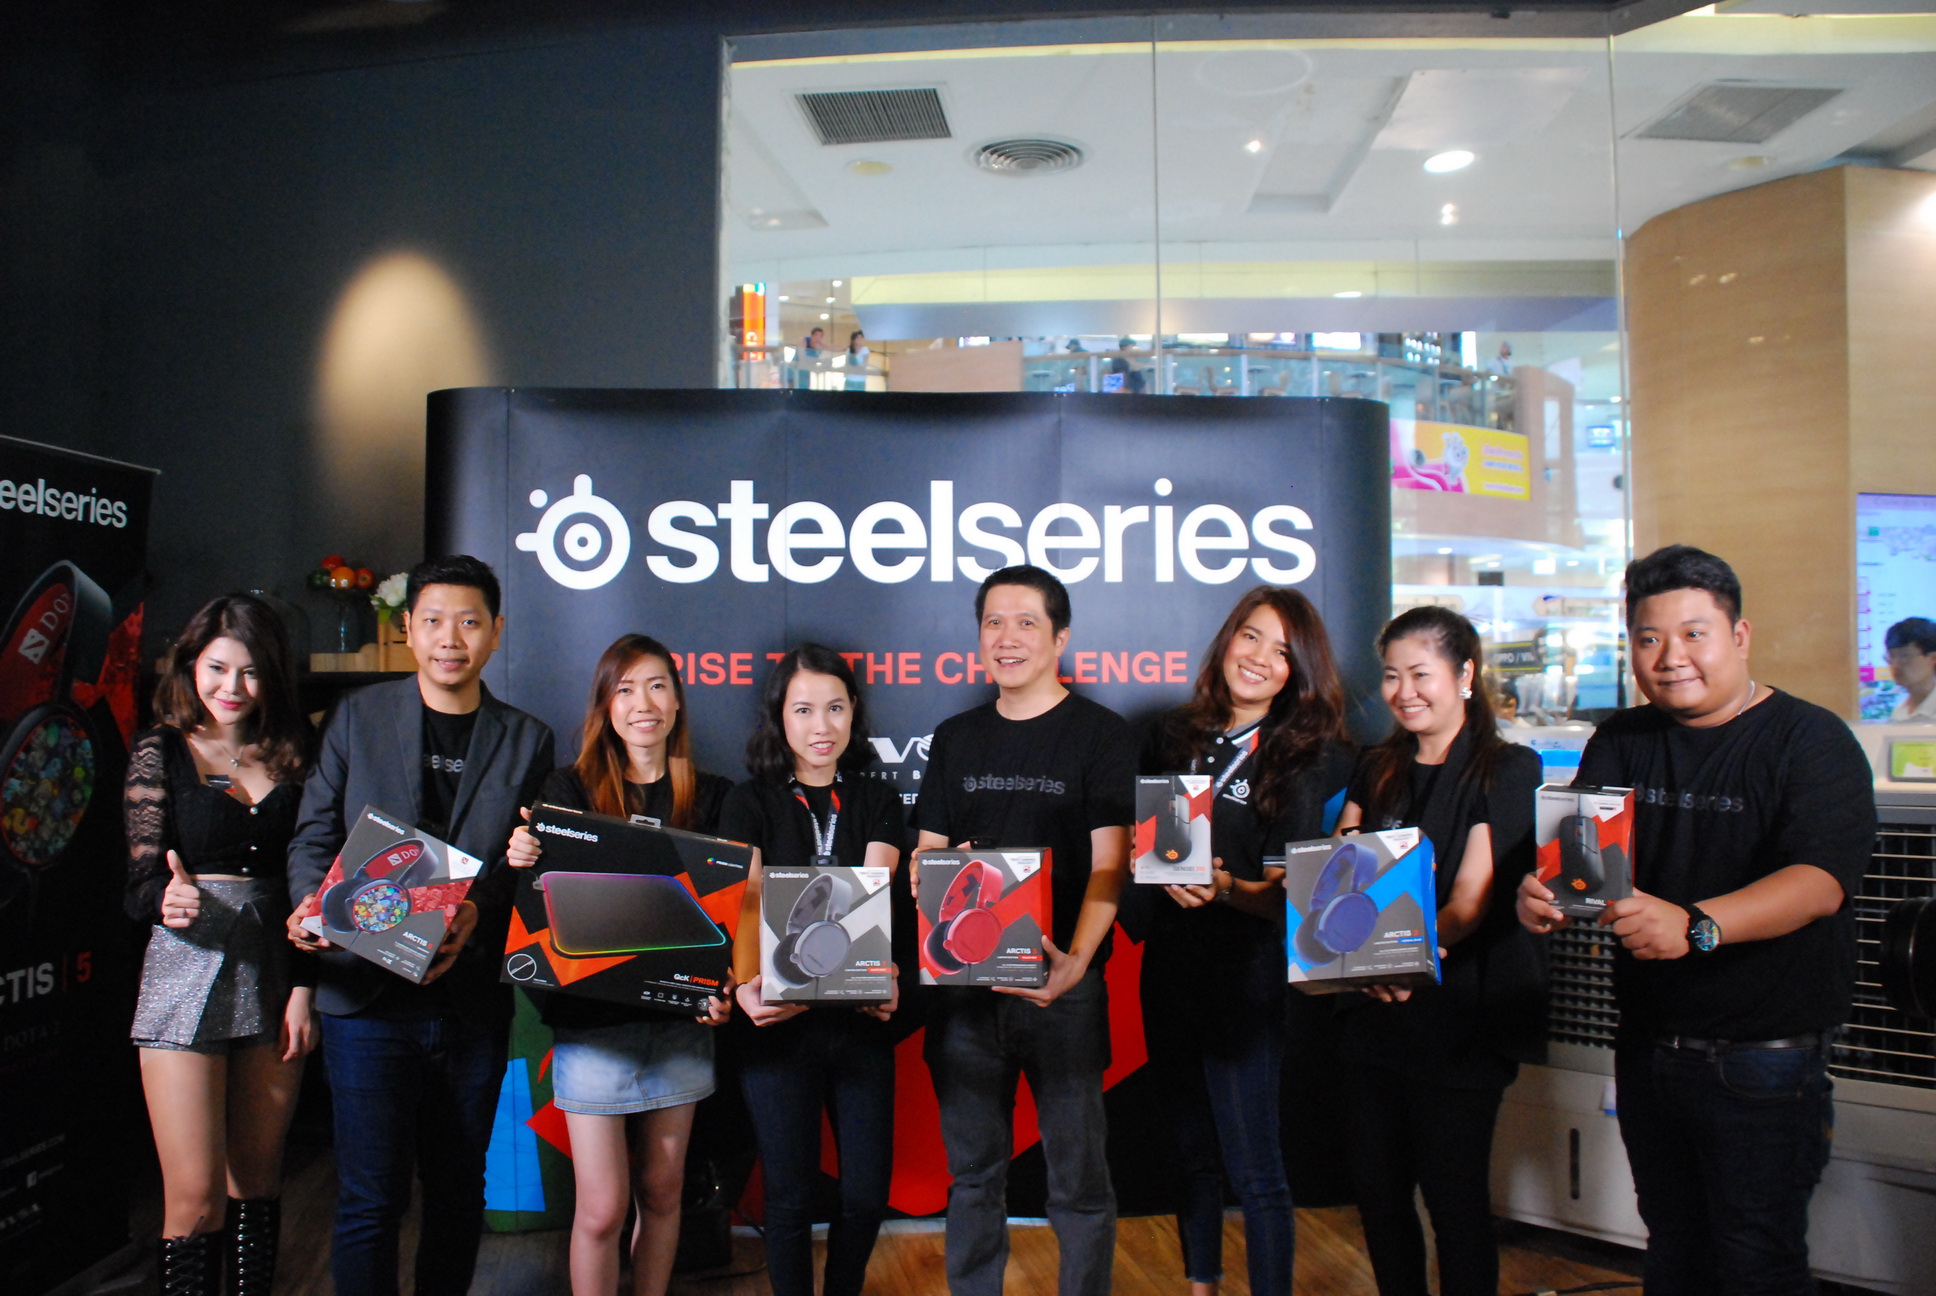 picture press conference resize SteelSeries เกมมิ่งเกียร์แบรนด์ดังระดับโลก ประกาศแต่งตั้งเพิ่มเติม บริษัท เอสวีโอเอ จำกัด (มหาชน) เป็นผู้นำเข้าและจัดจำหน่ายสินค้าอย่างเป็นทางการ พร้อมรุกตลาดไลน์อัพสินค้าใหม่ทั่วประเทศ